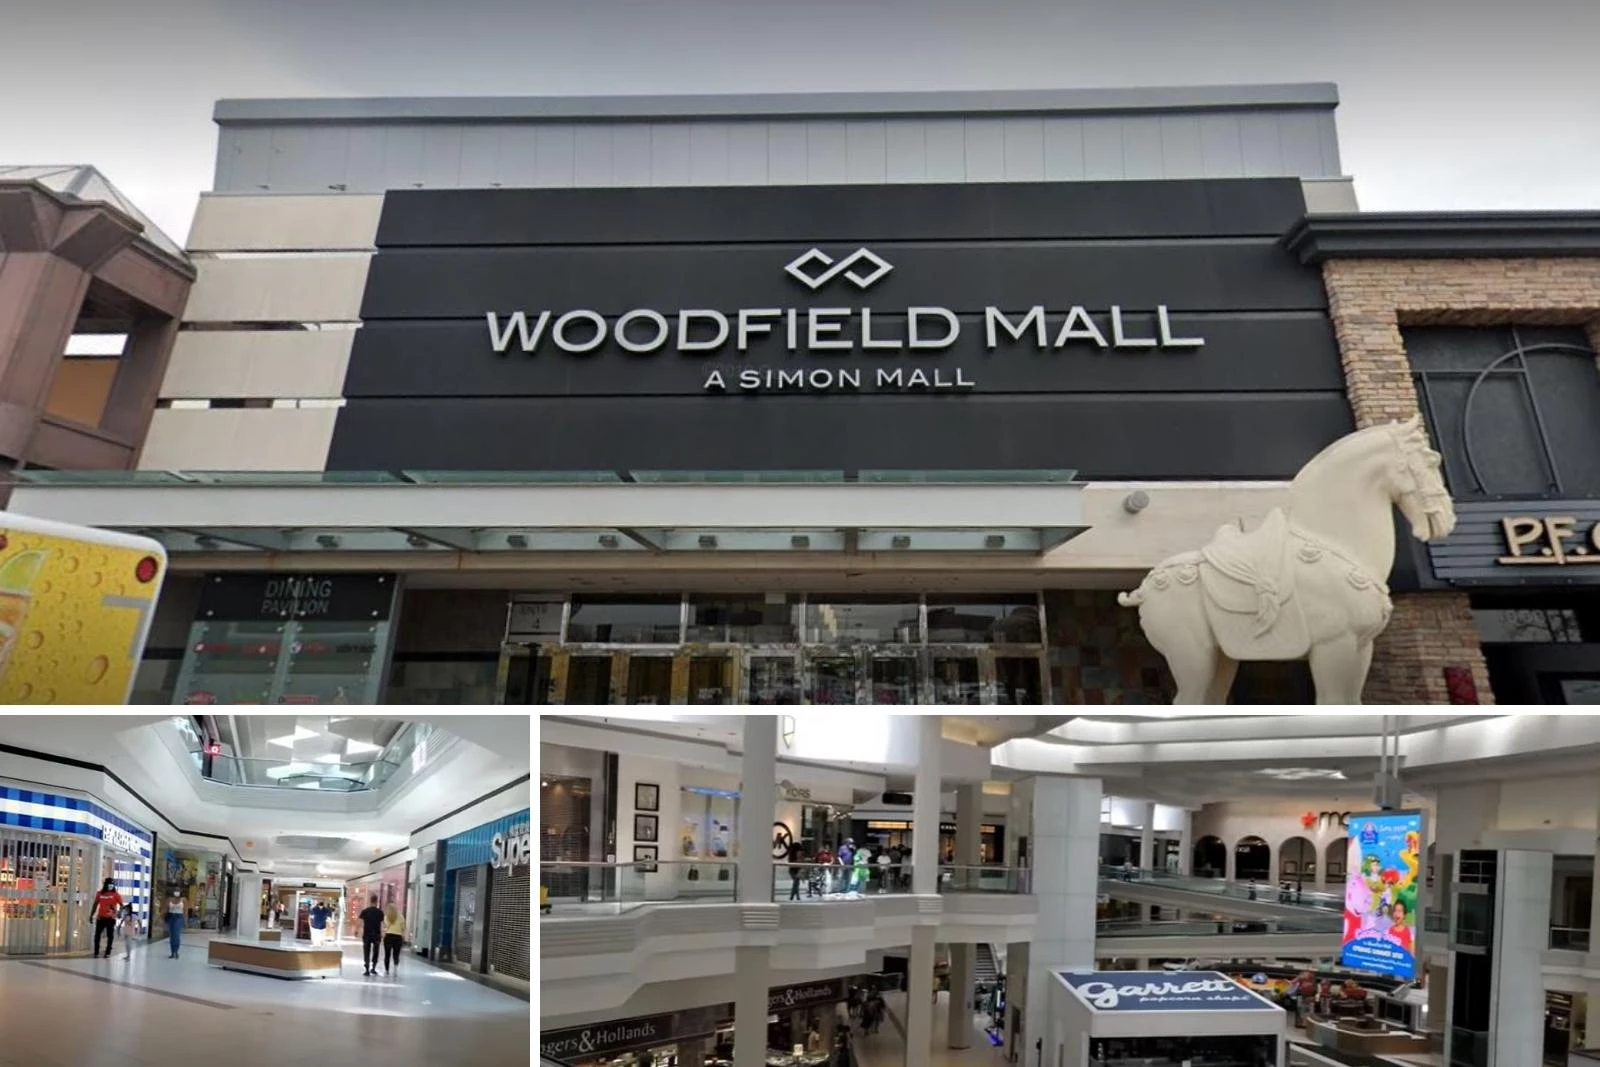 WOODFIELD MALL - 5 Woodfield Mall, Schaumburg, Illinois - Shopping